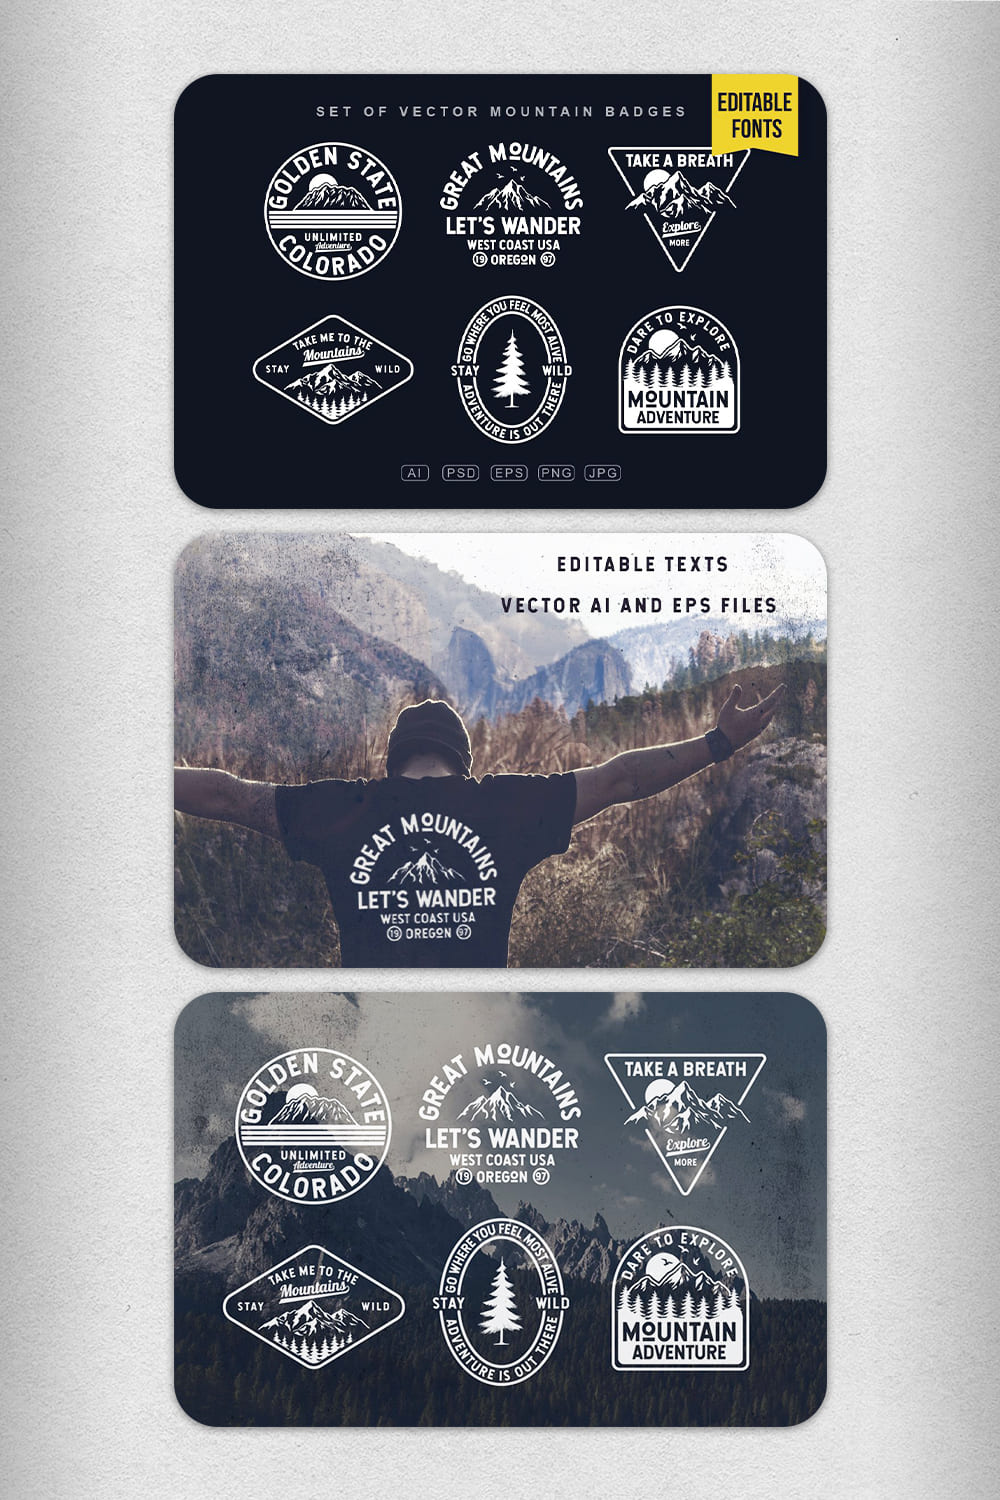 Vector Mountain Badges Pinterest images.